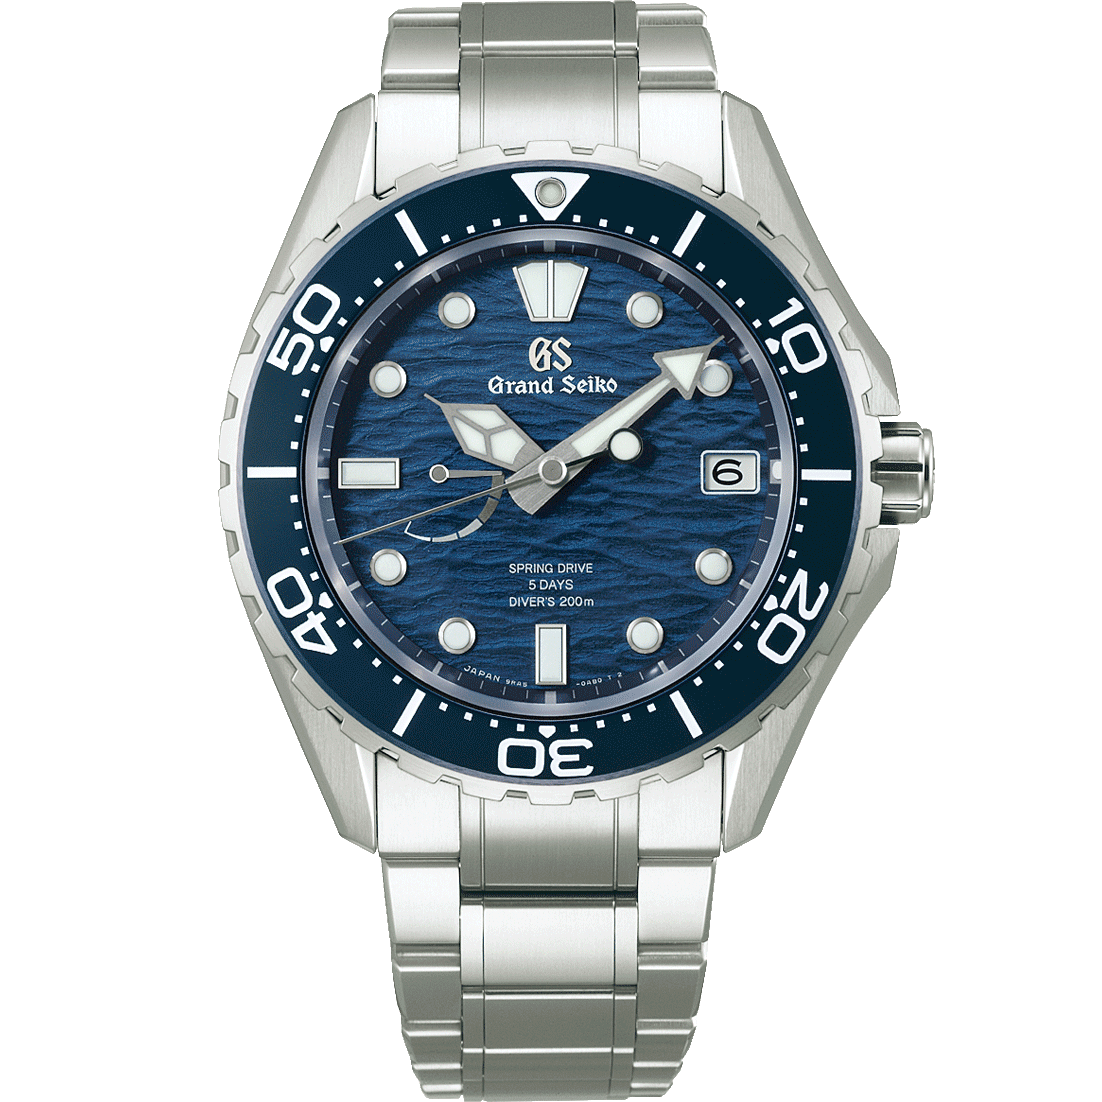 Grand Seiko SLGA023 blue dial Evolution 9 dive watch